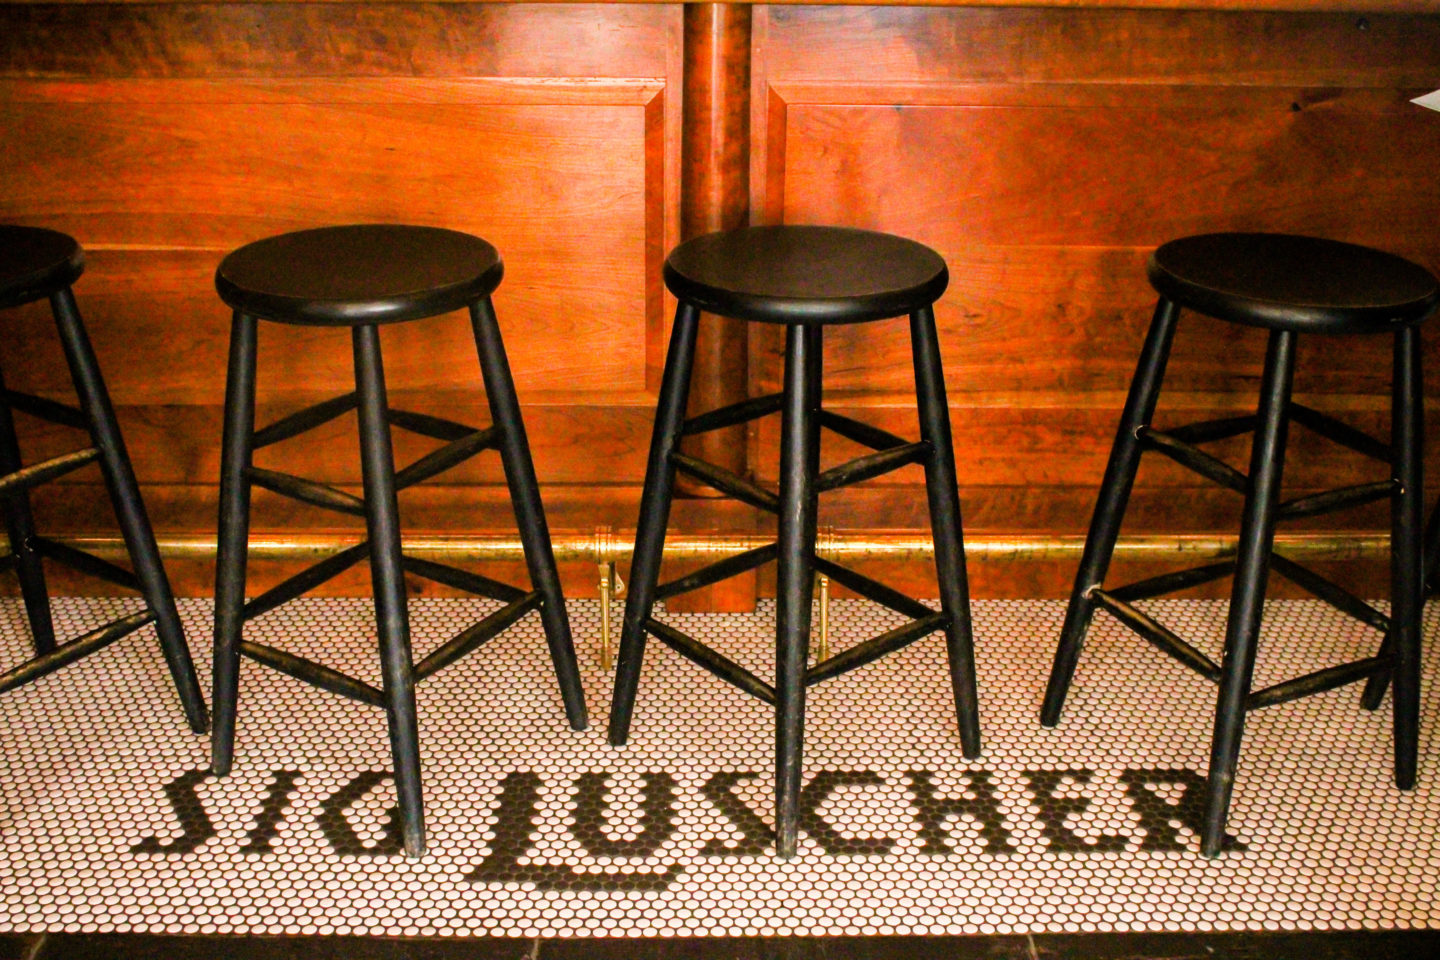 sig luscher tiled floor with bar stools